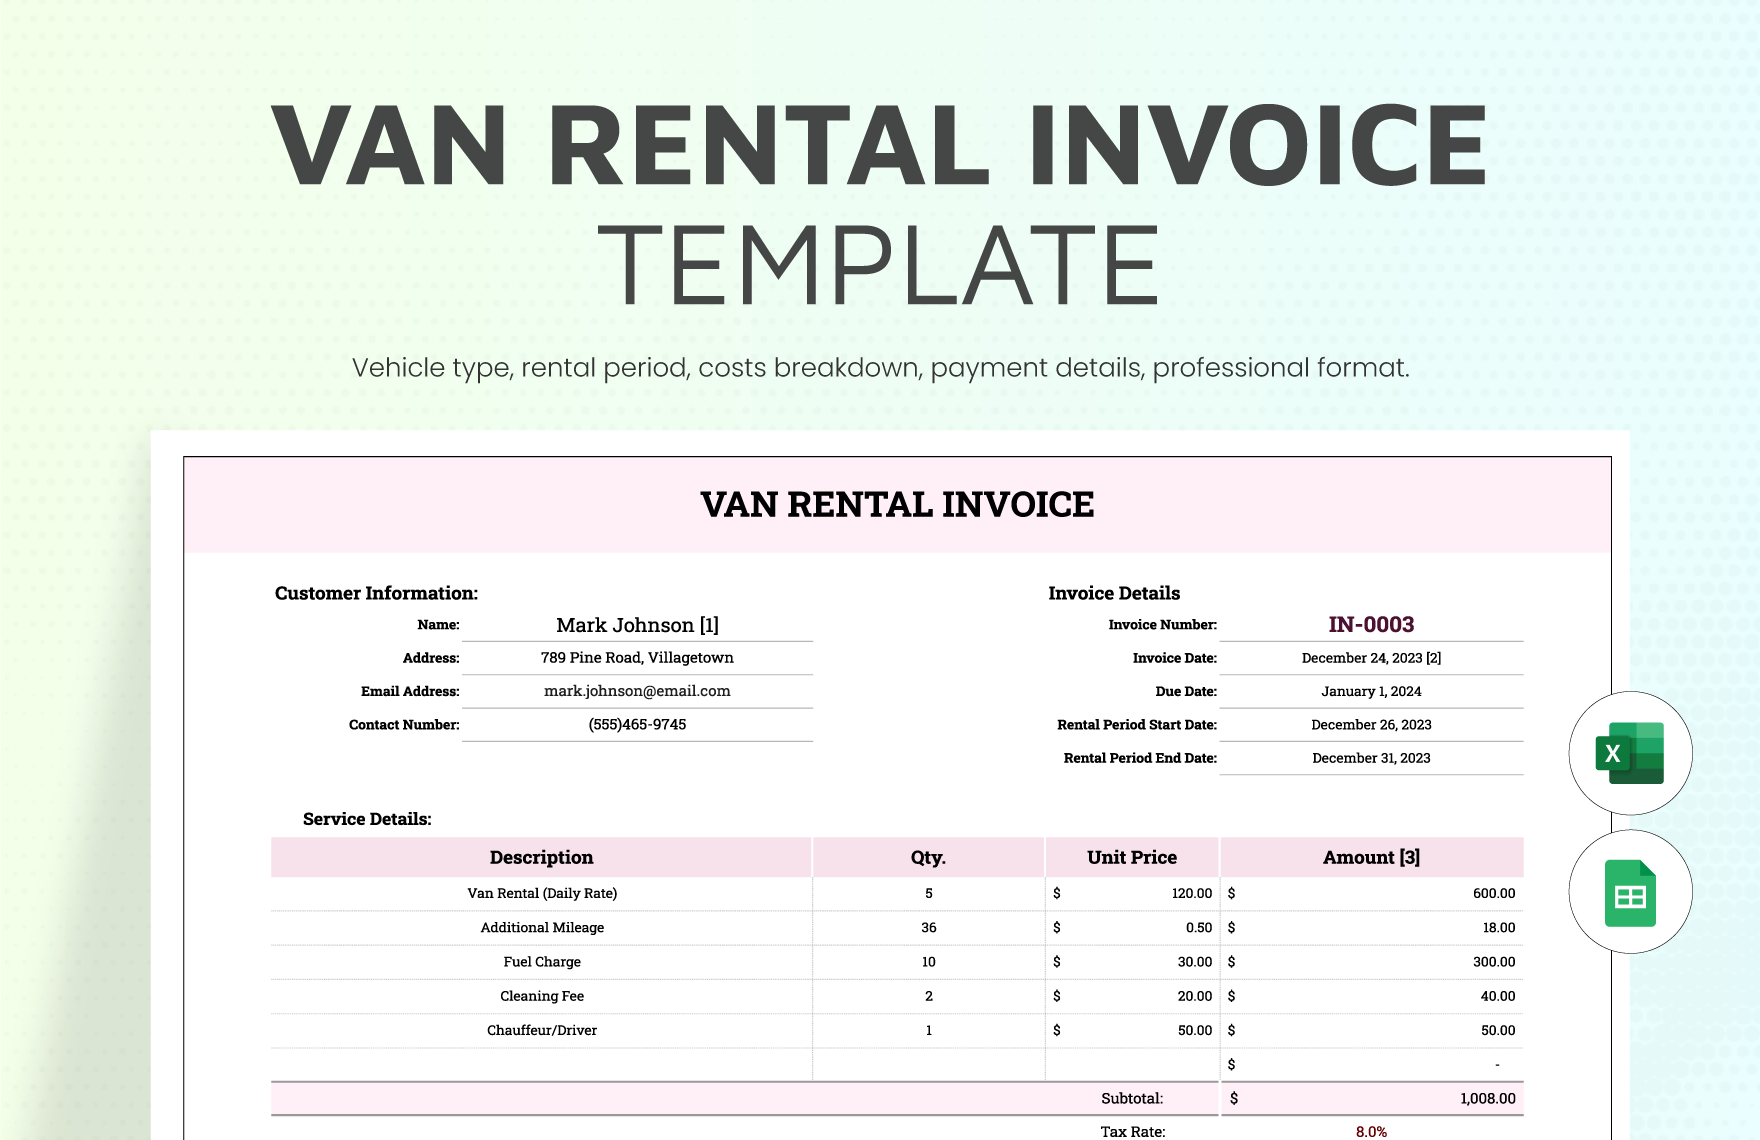 Van Rental Invoice Template